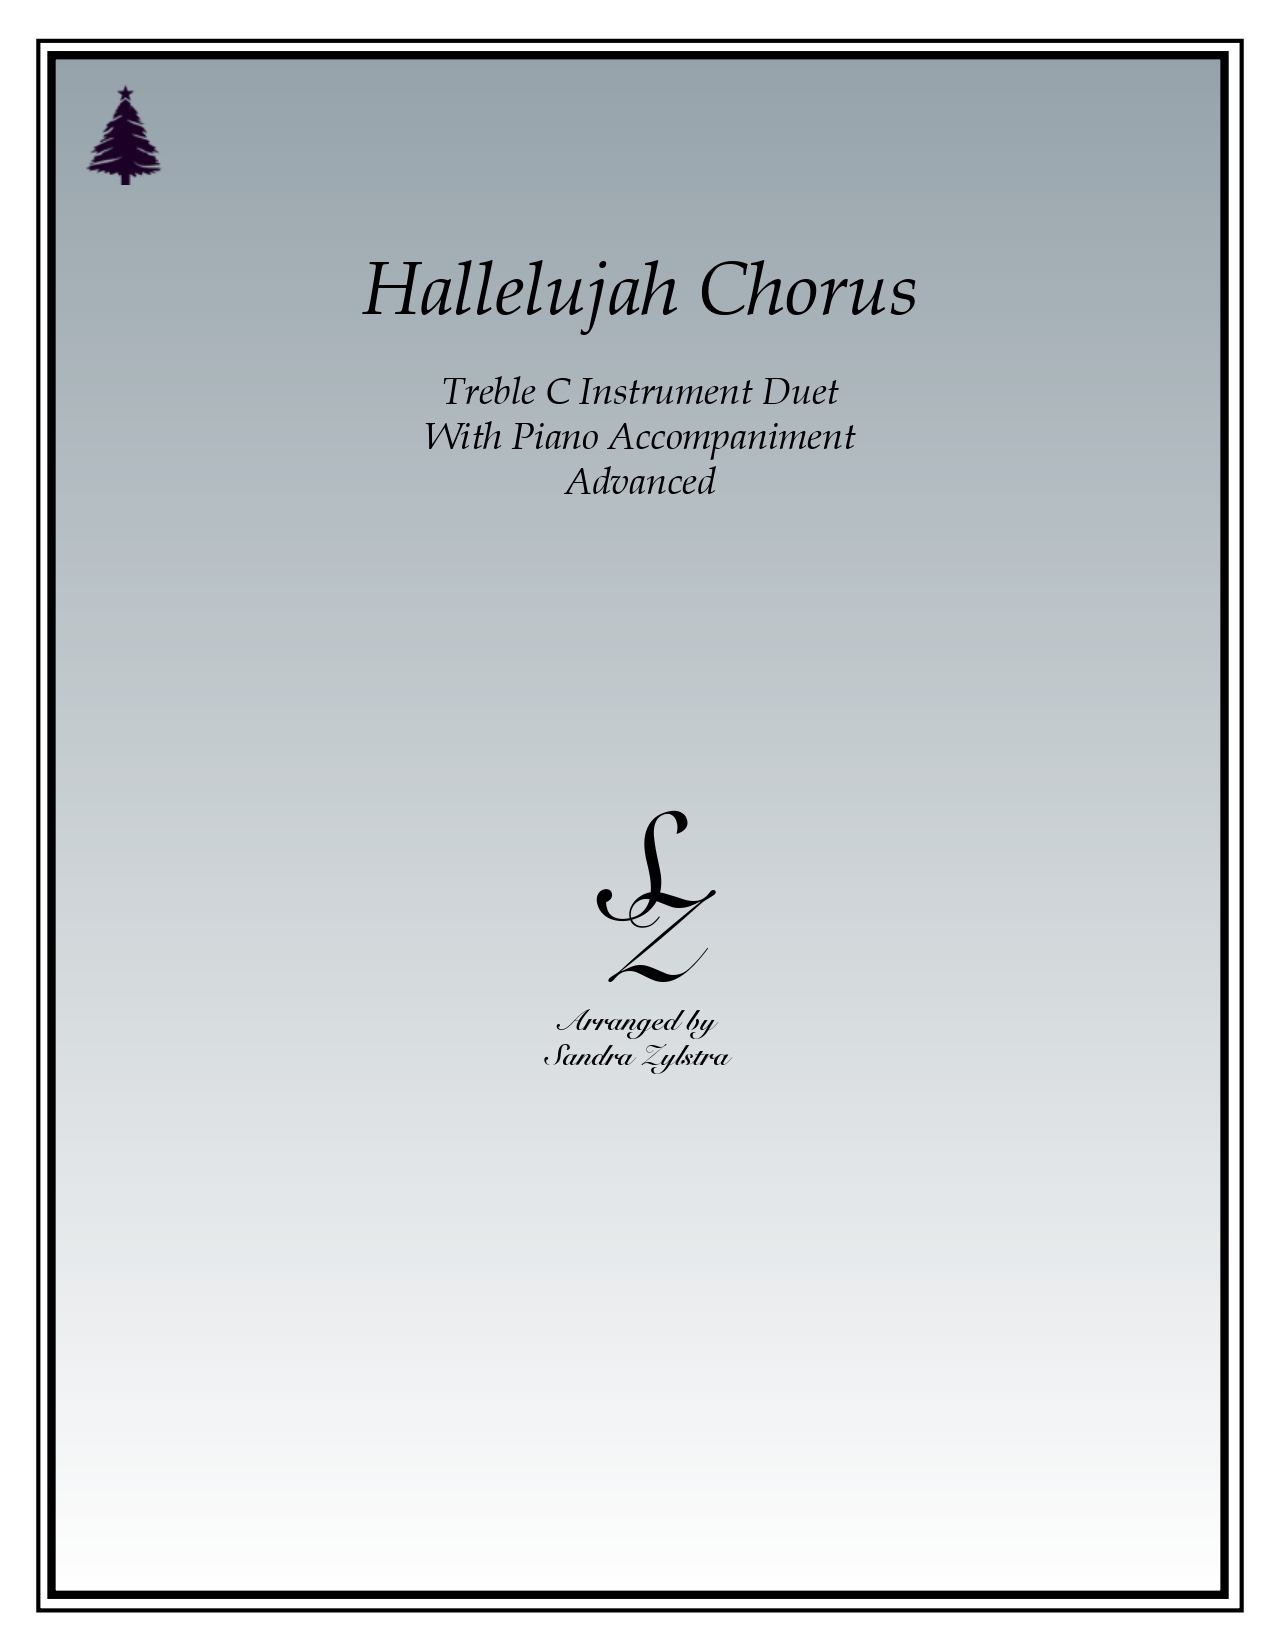 Hallelujah Chorus treble C instrument duet parts cover page 00011